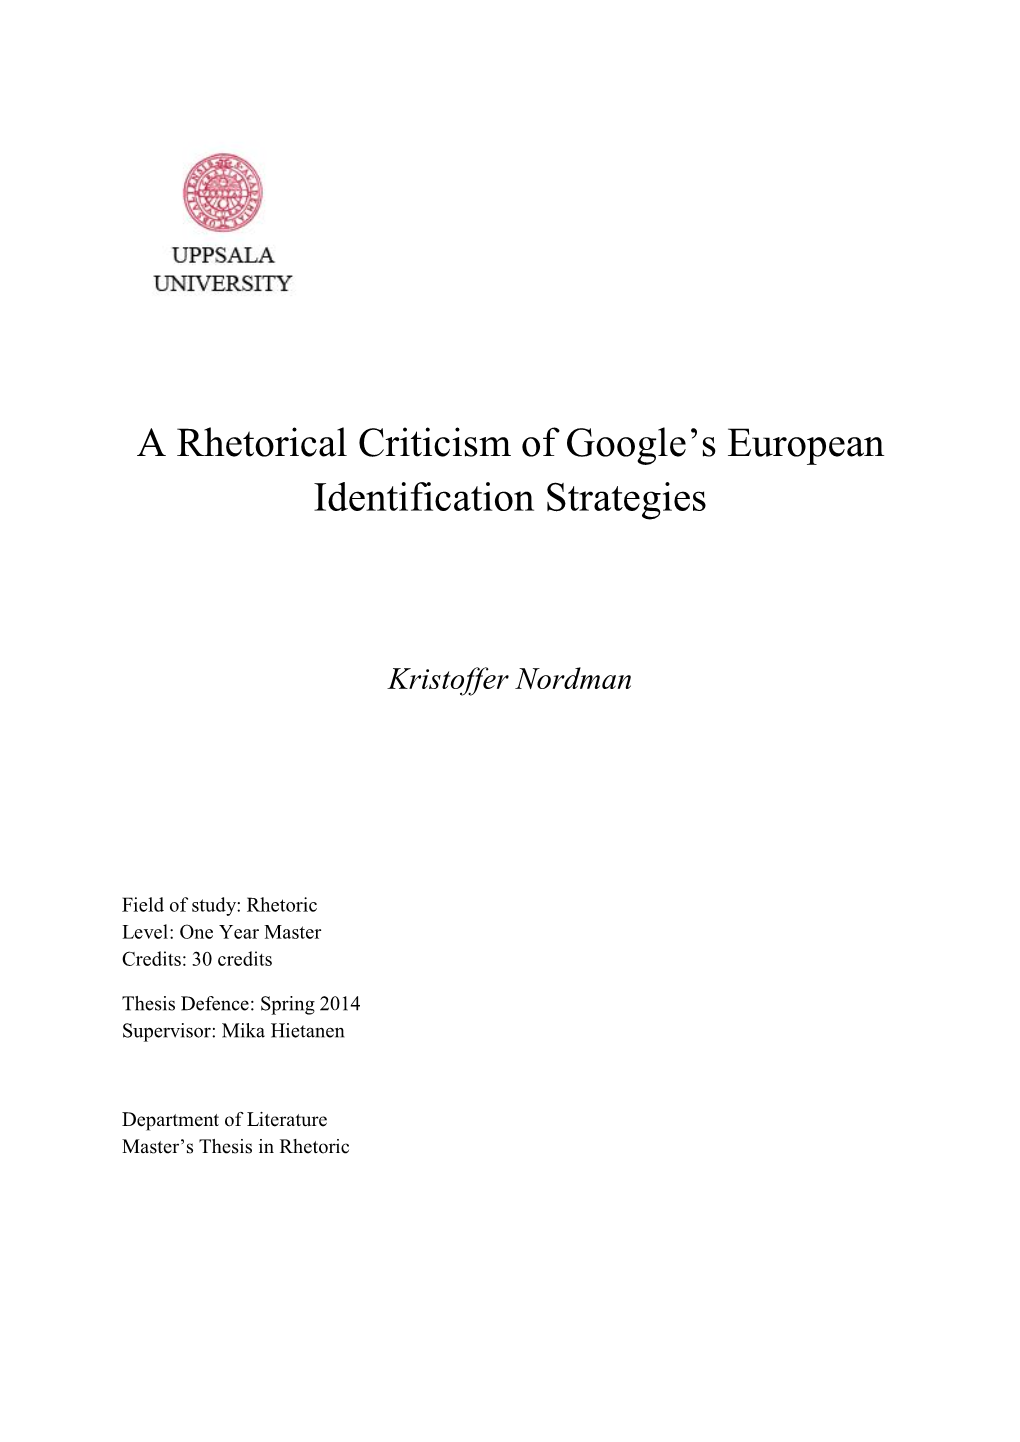 A Rhetorical Criticism of Google's European Identification Strategies